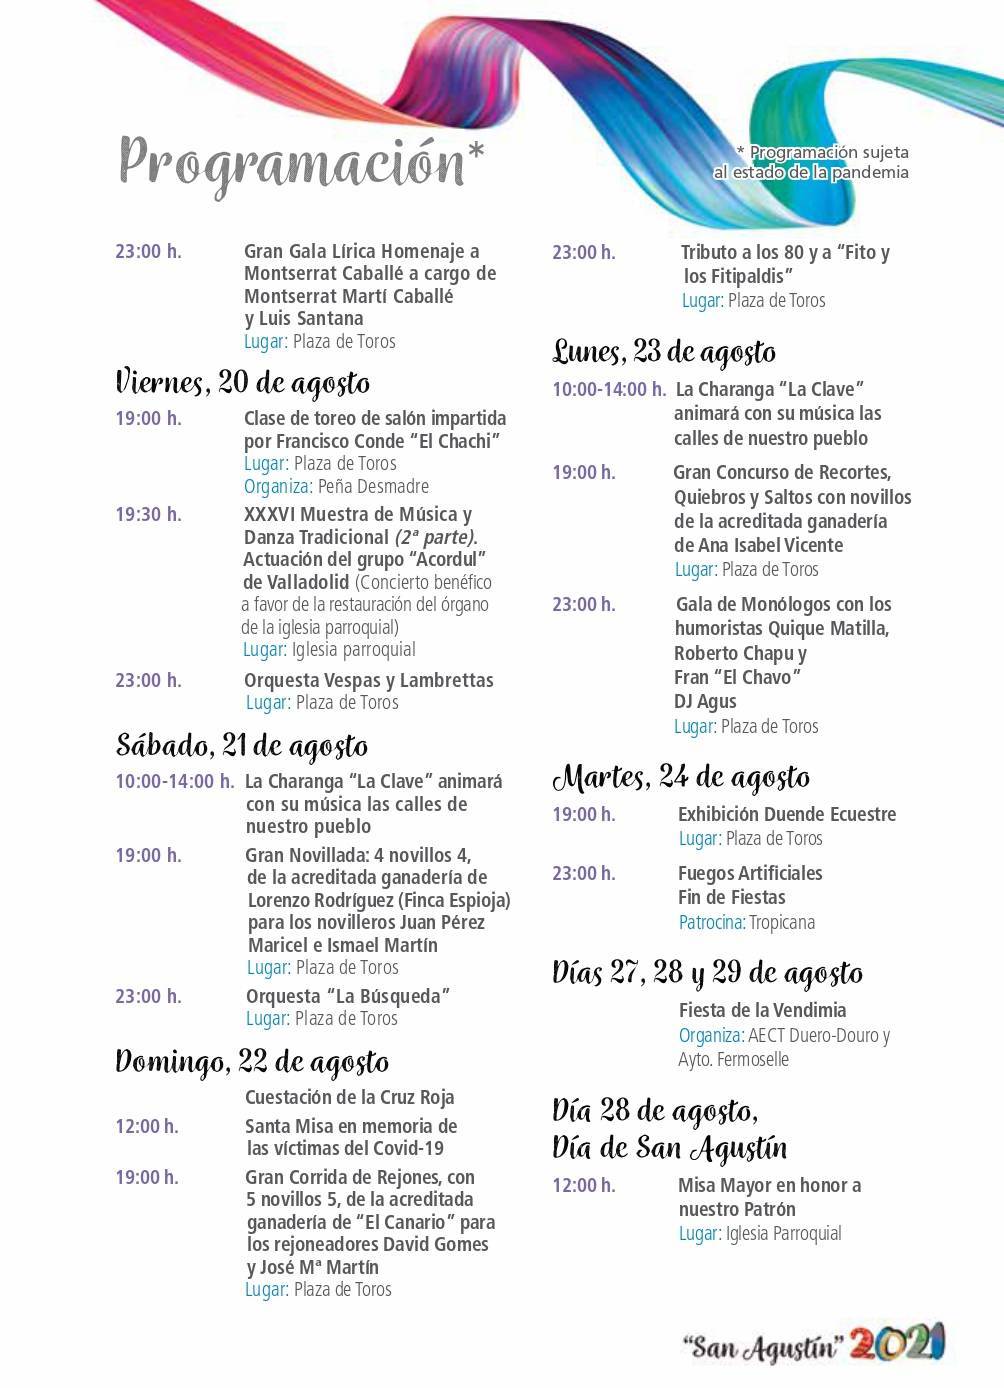 Programa de ferias y fiestas de San Agustín (2021) - Fermoselle (Zamora) 8